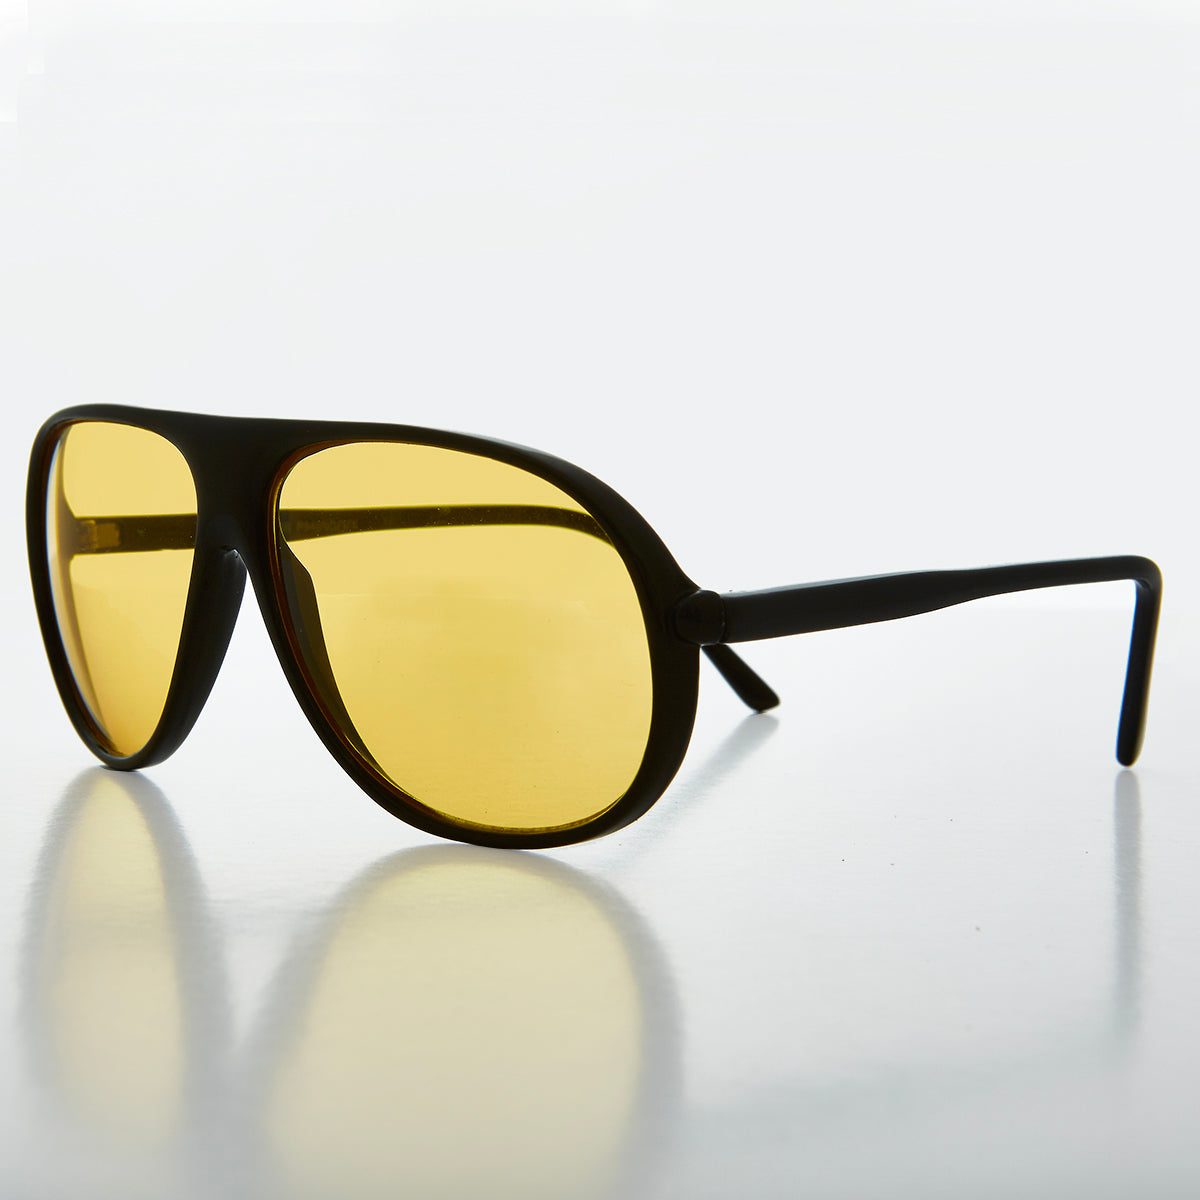 pilot vintage sunglasses with yellow lenses